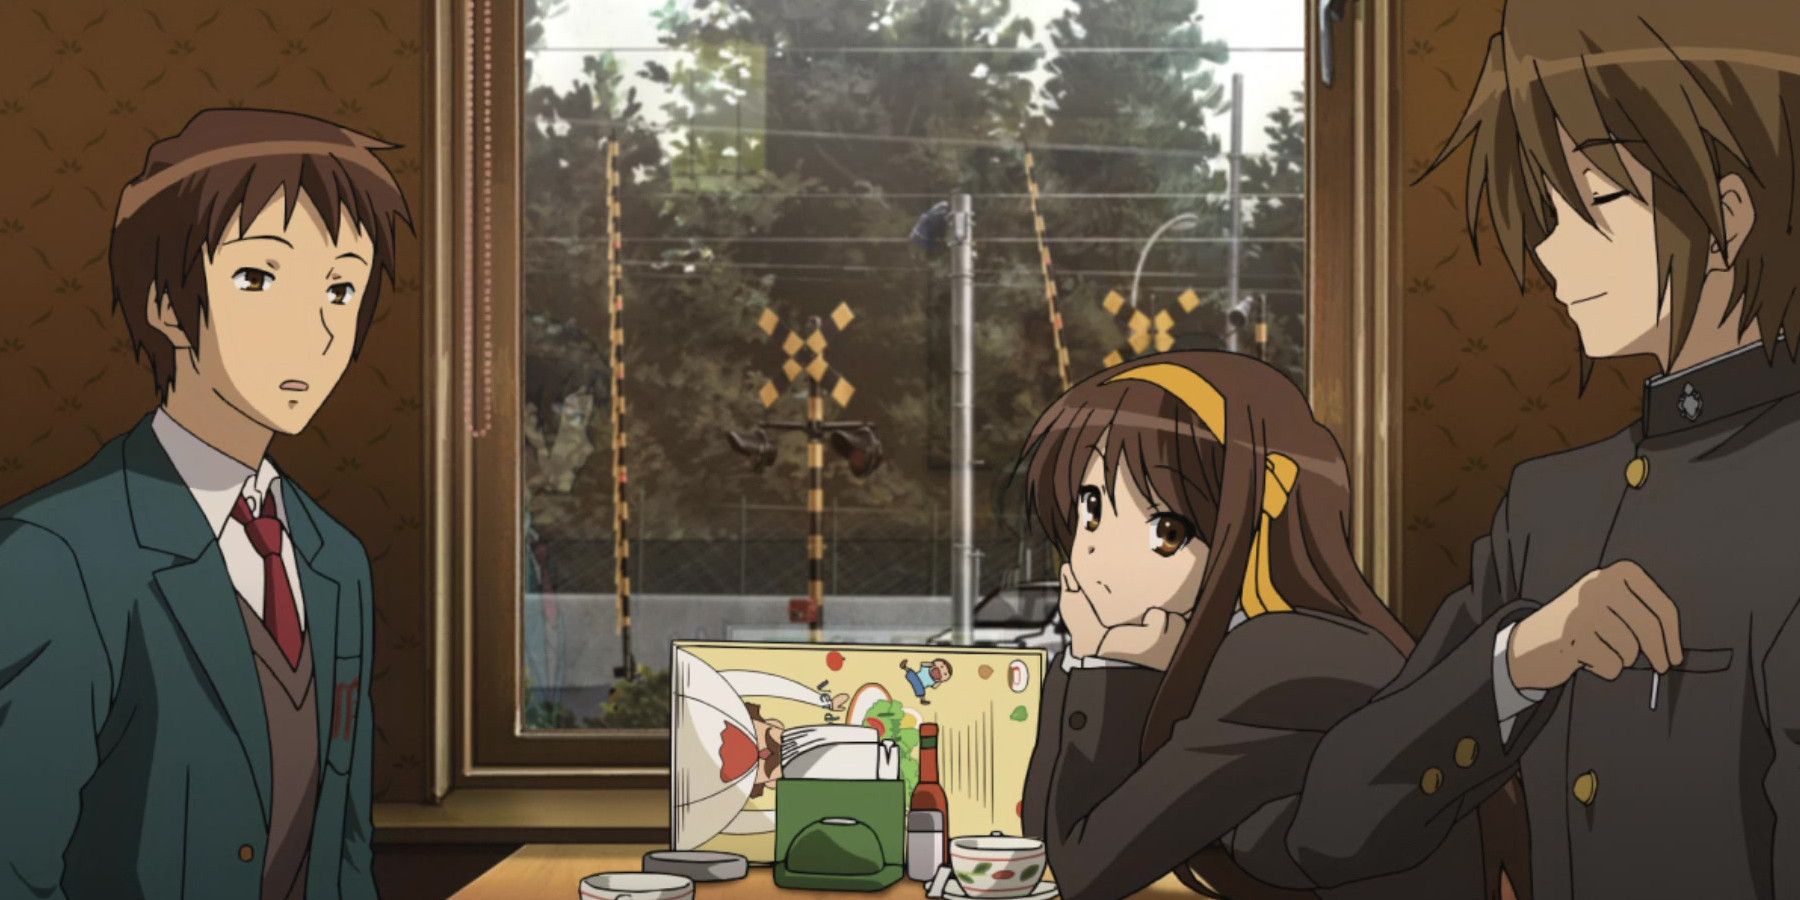 Screenshot from The Disappearance of Haruhi Suzumiya showing Haruhi, Koizumi and Kyon sitting together